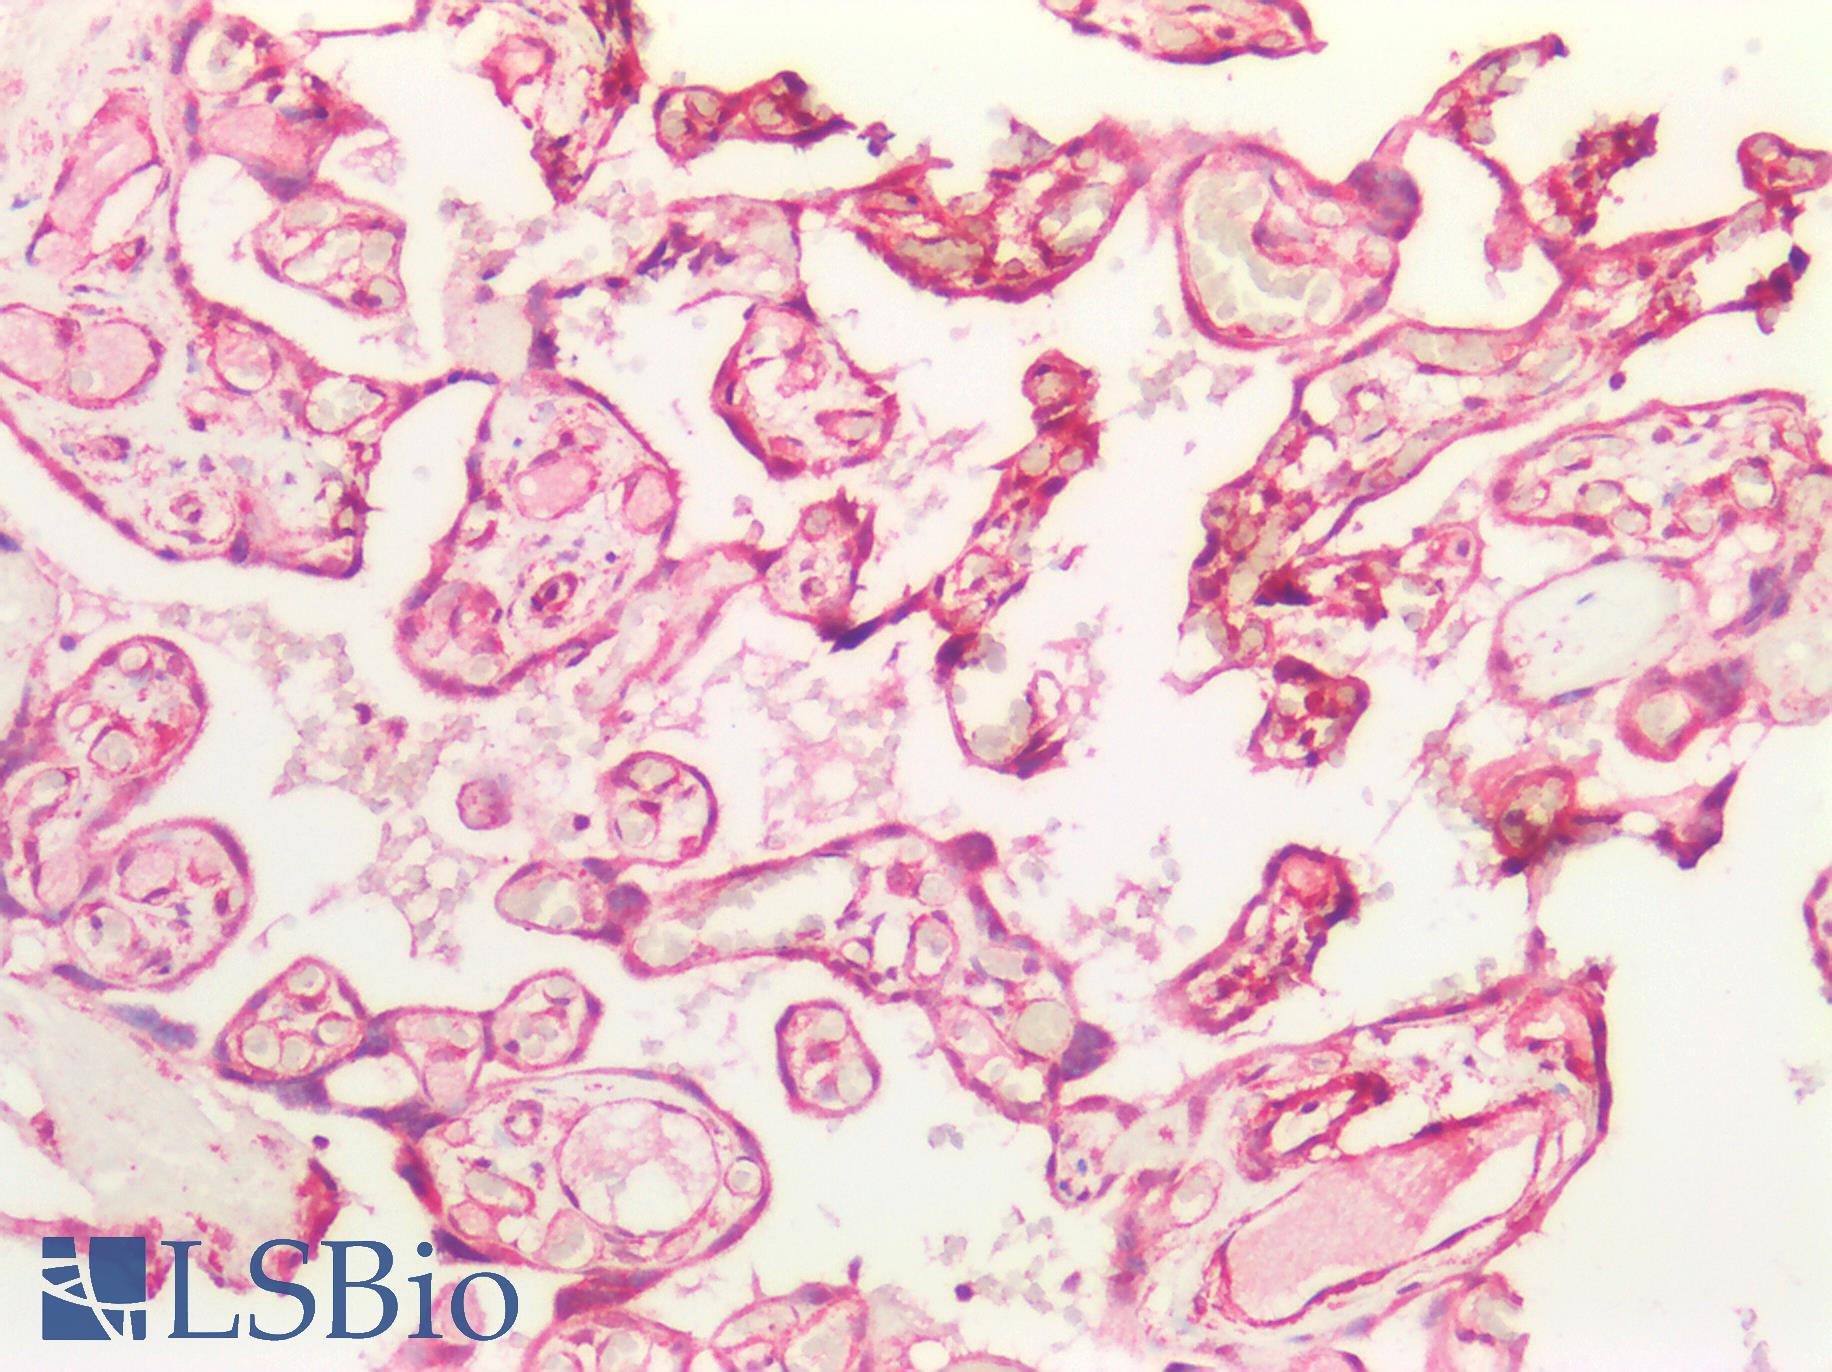 TGFBR1 / ALK5 Antibody - Human Placenta: Formalin-Fixed, Paraffin-Embedded (FFPE)